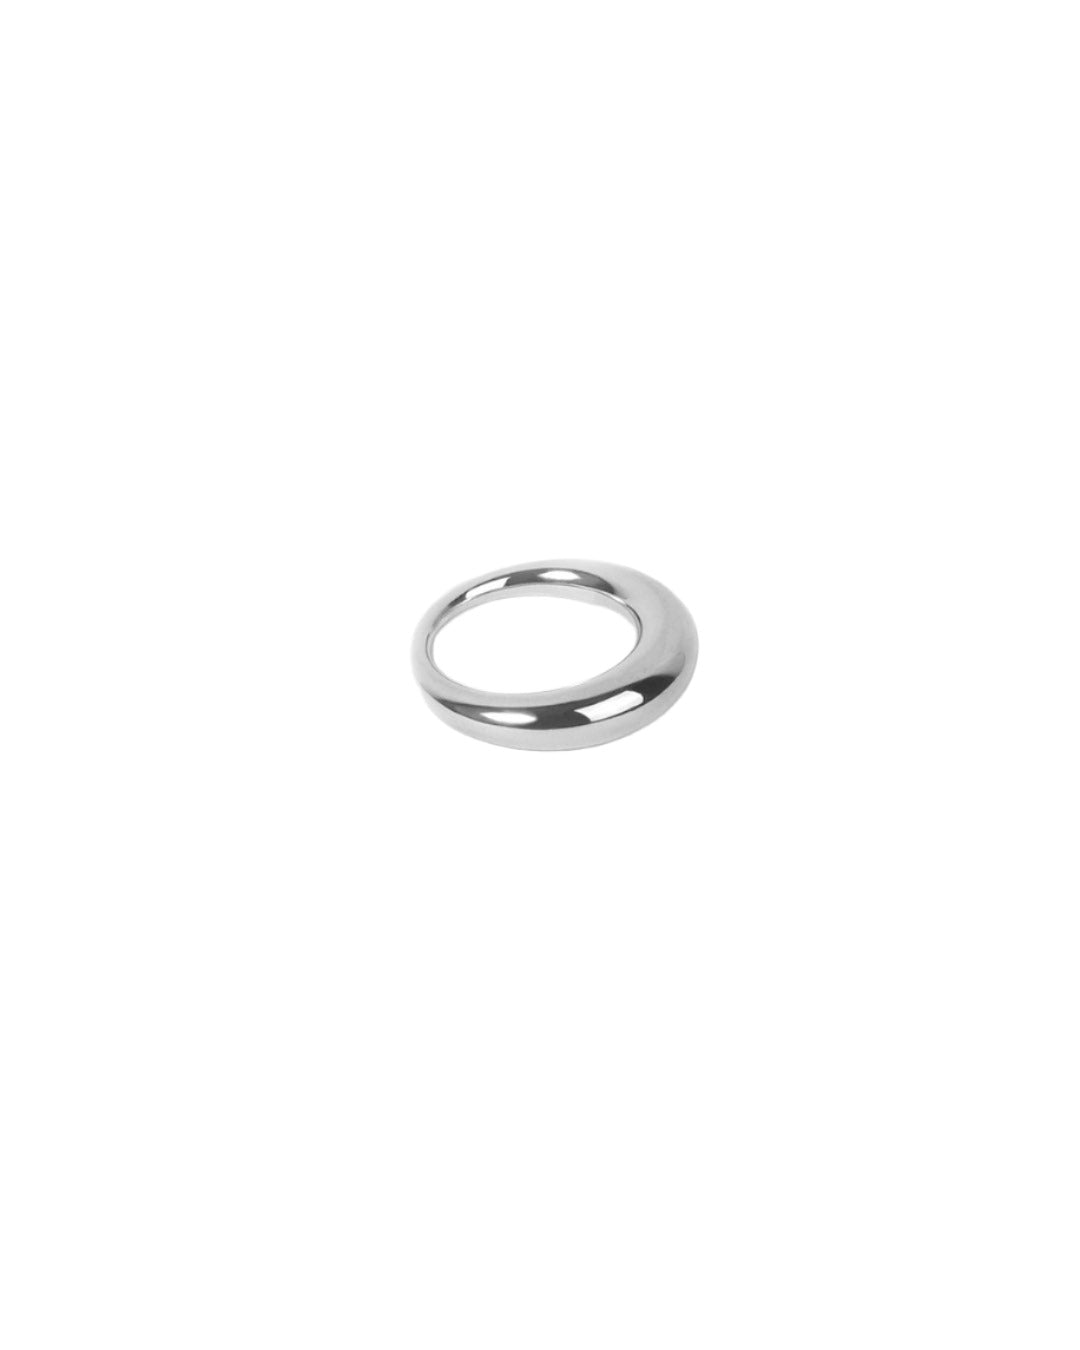 Handmade simple silver ring - NEEO Tide